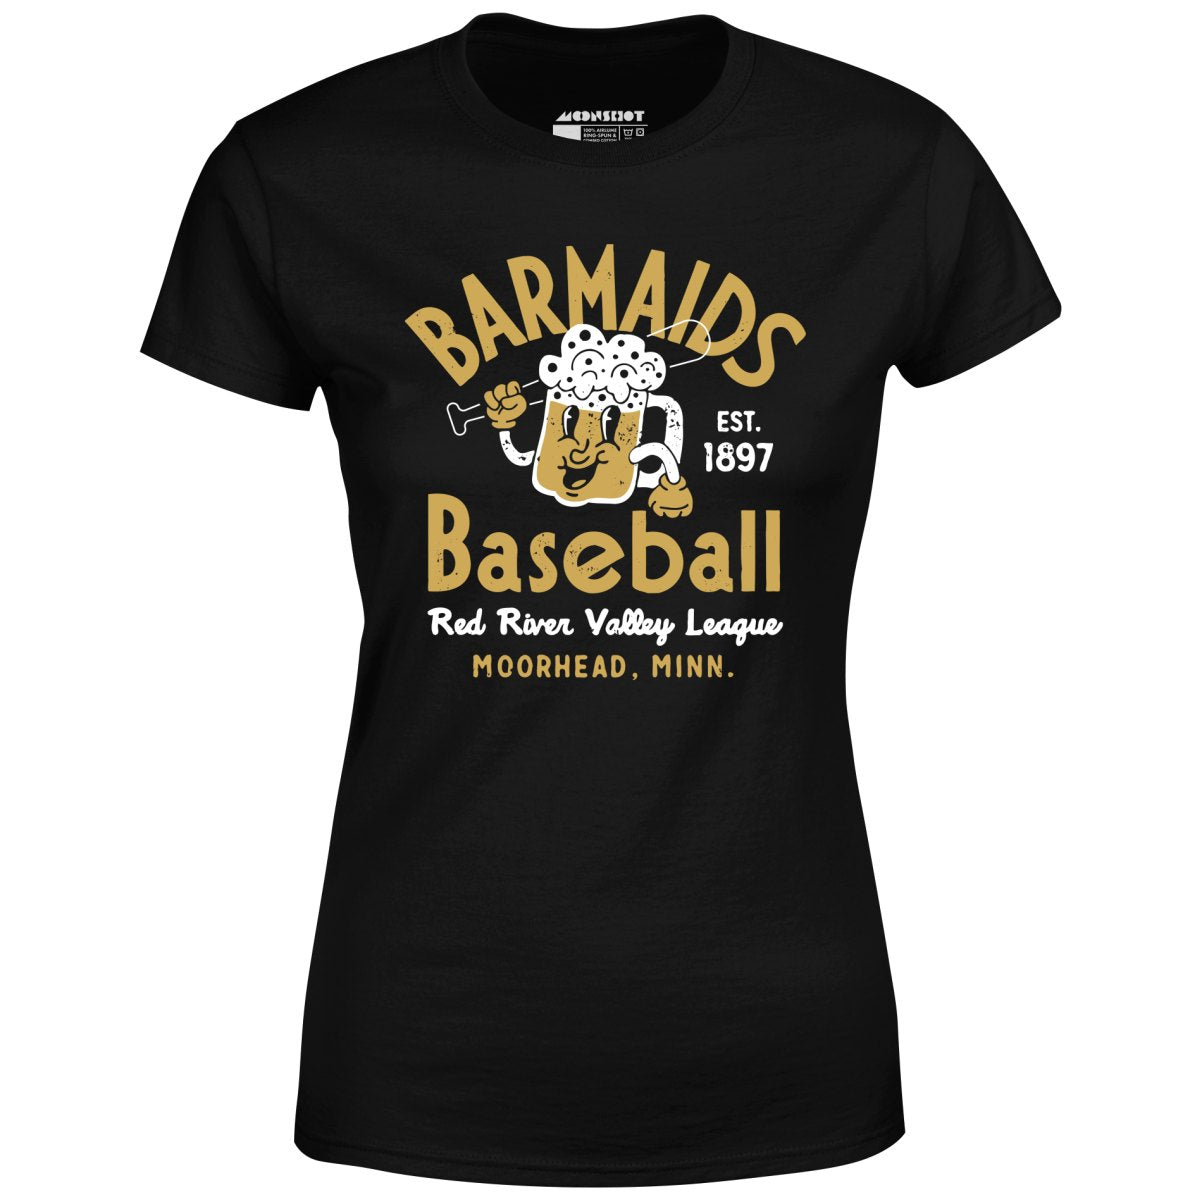 Moorhead Barmaids - Minnesota - Vintage Defunct Baseball Teams - Women's T-Shirt